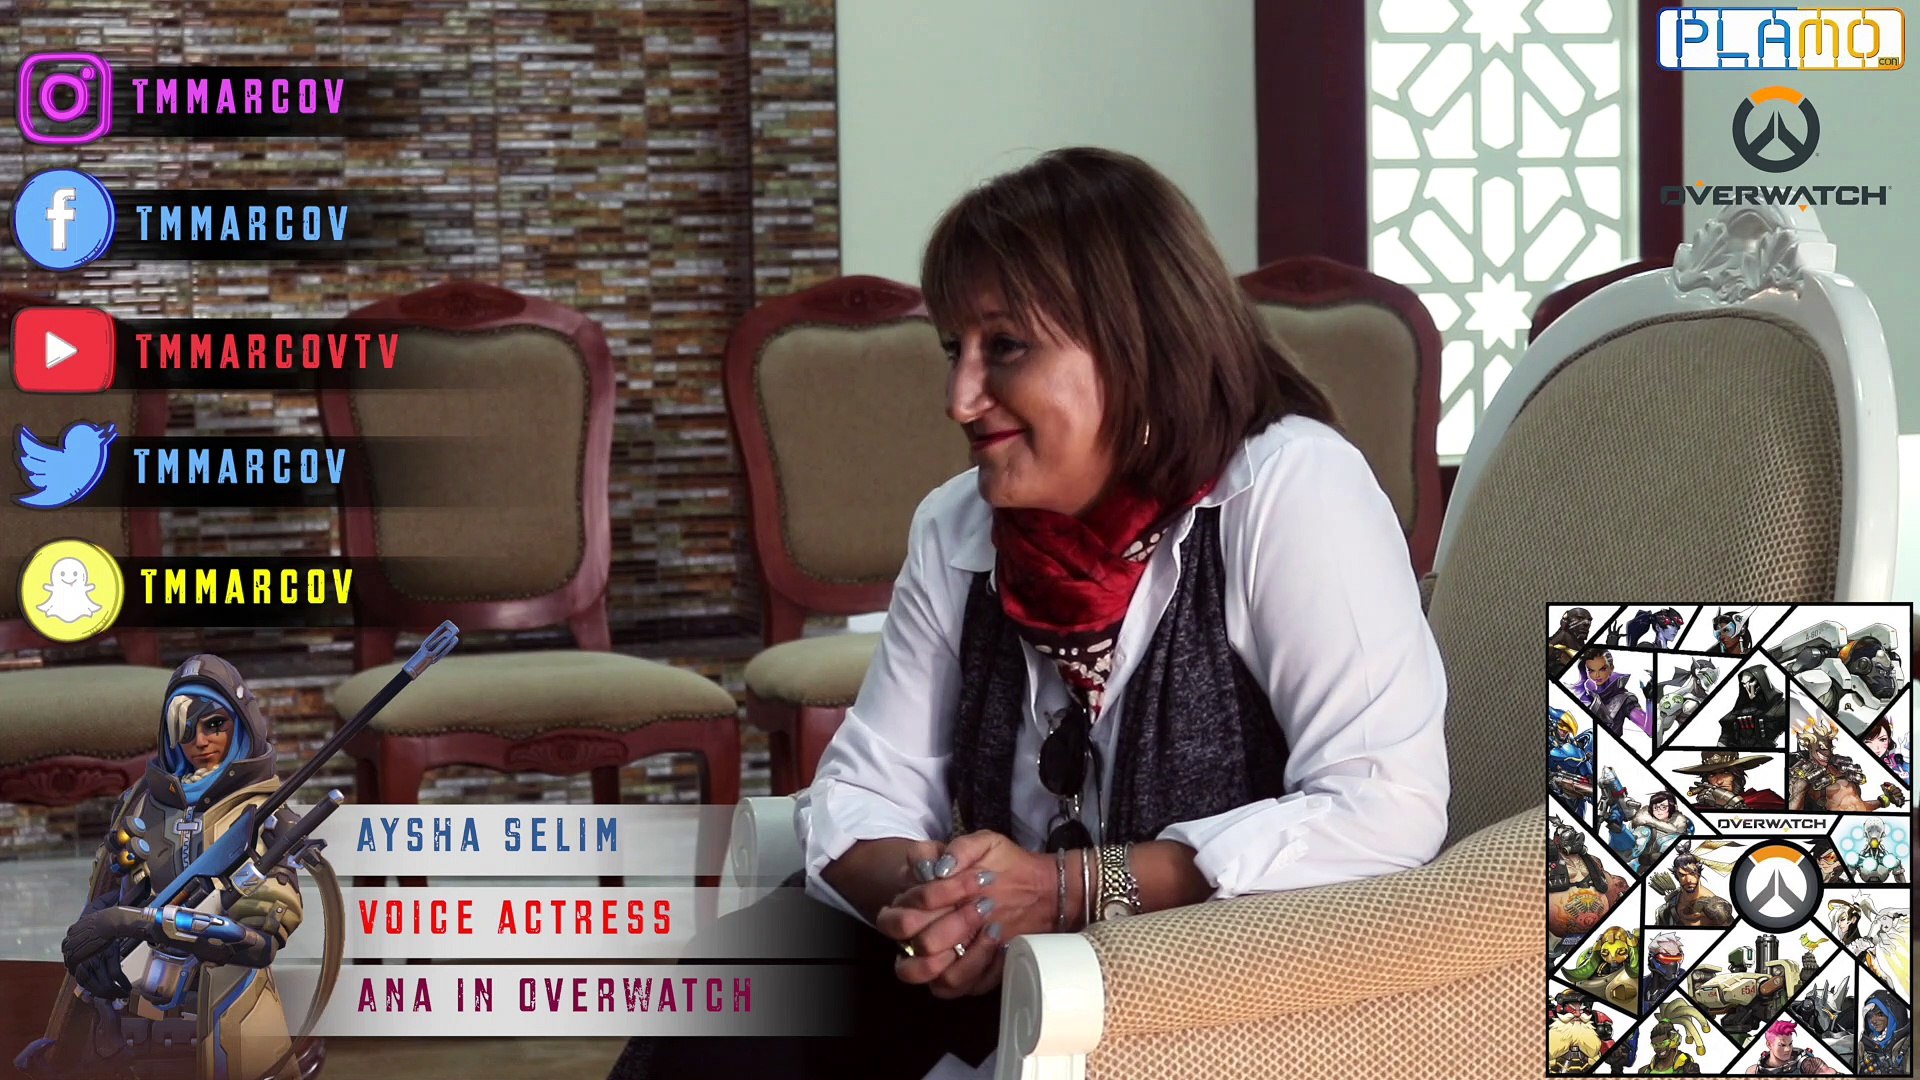 Aysha Selim (Ana) Overwatch interview - مقابلة "آنا" من لعبة اوفر واتش -  فيديو Dailymotion